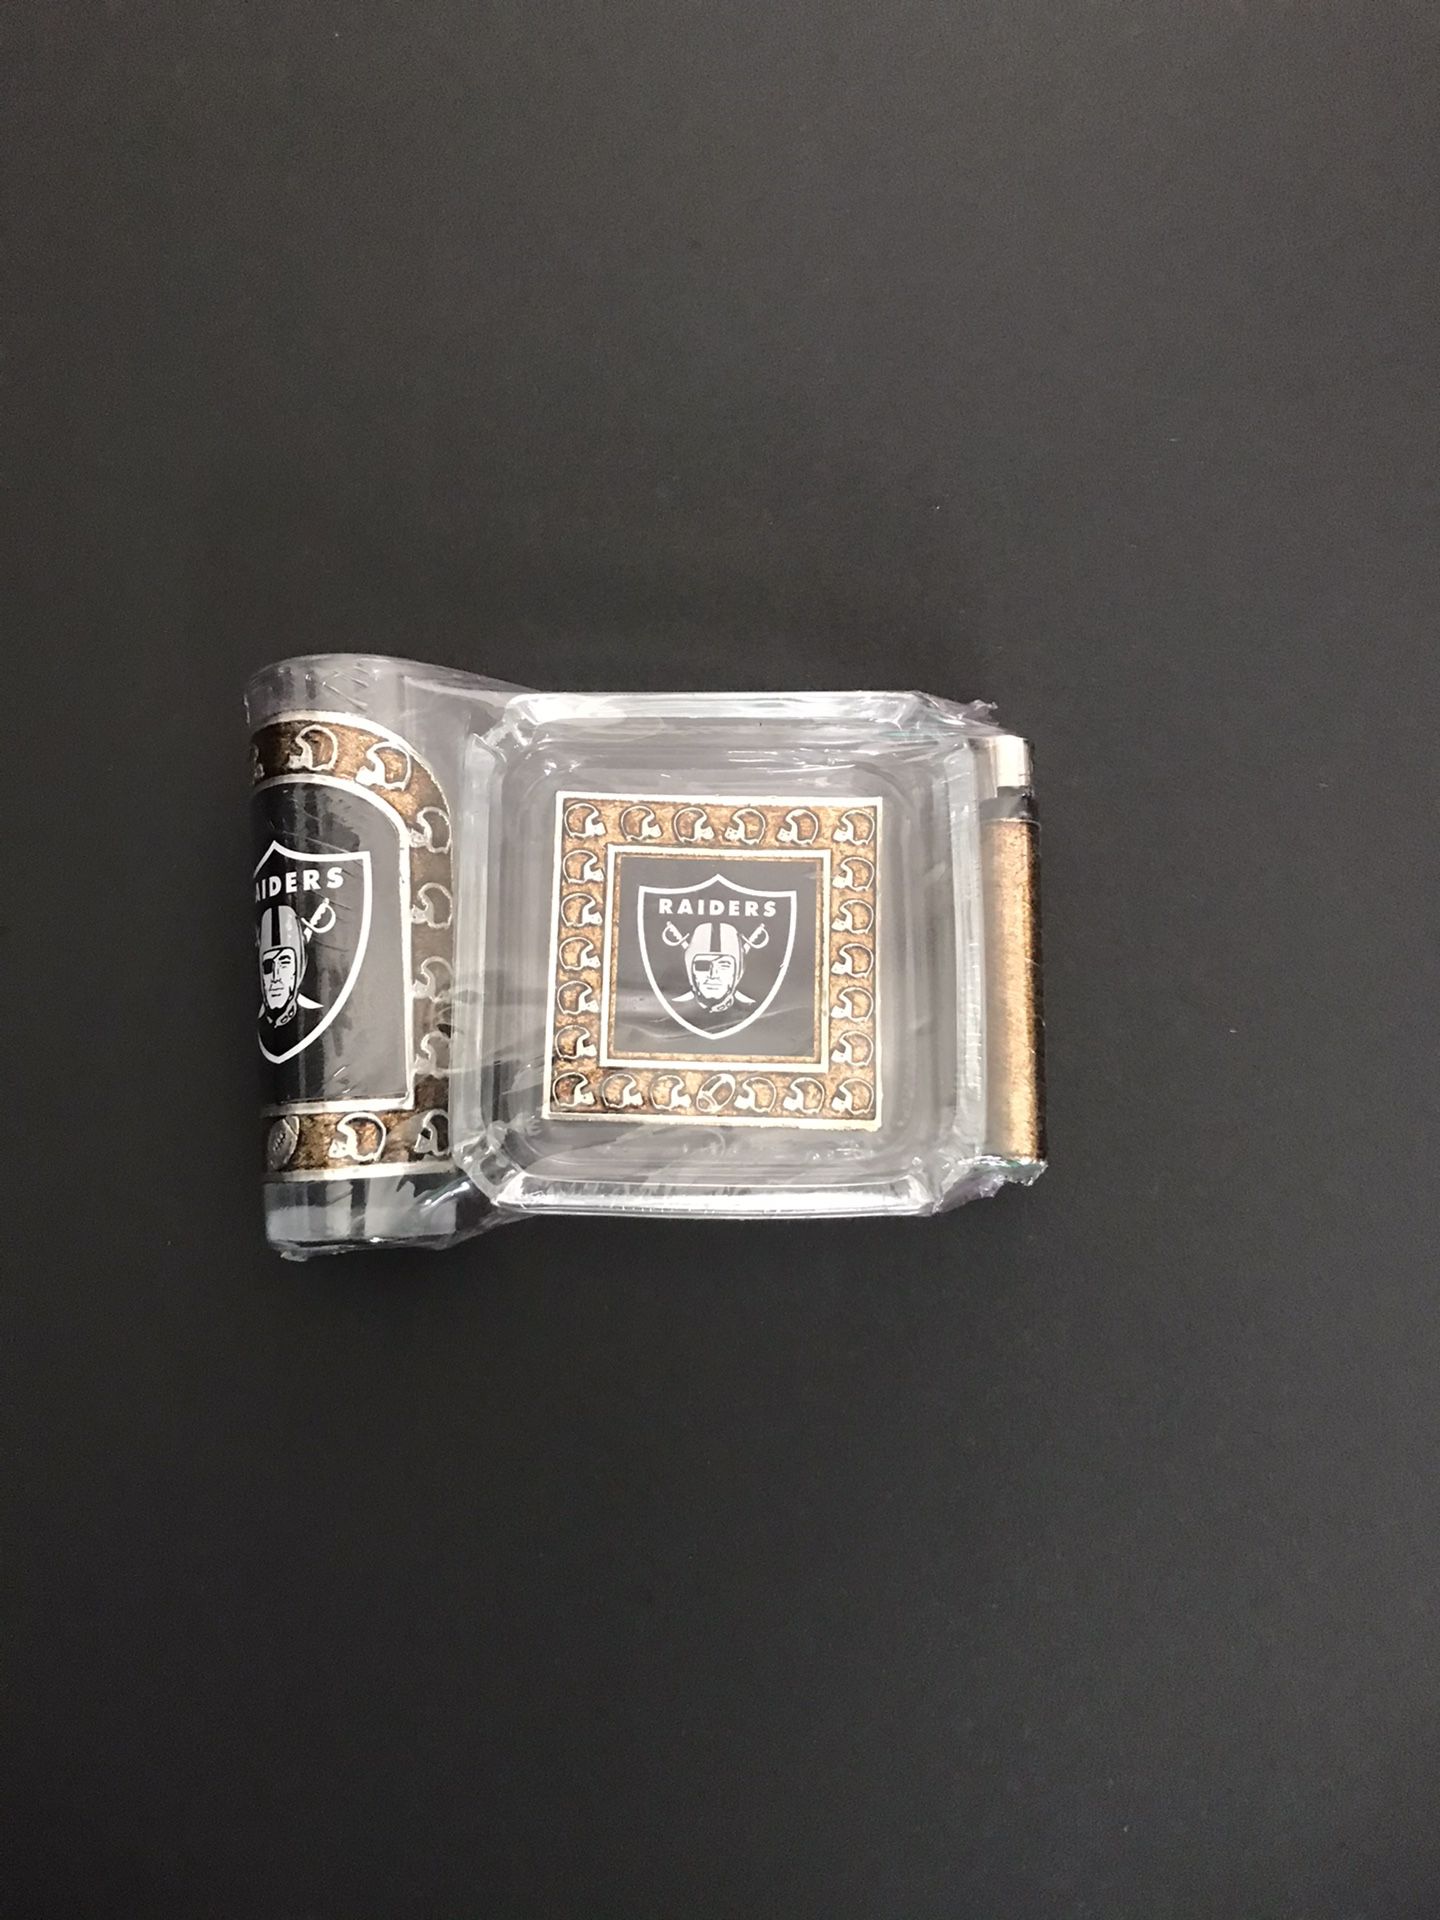 Las Vegas Raiders ashtray set